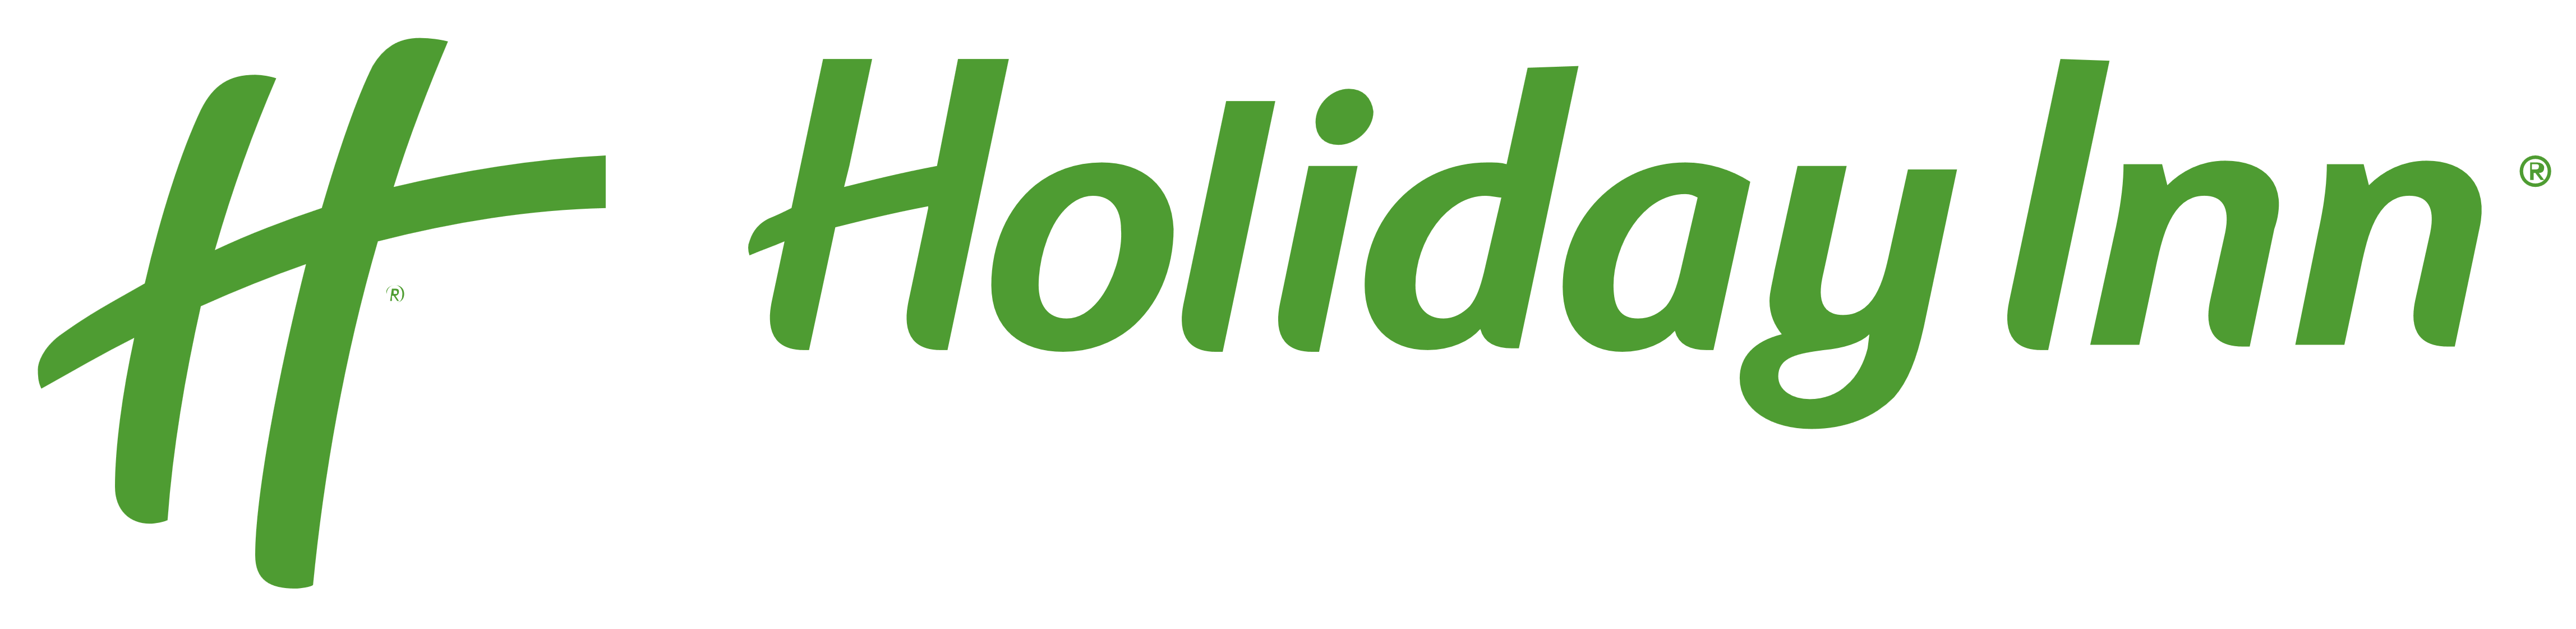 Holiday Inn logo, logotype